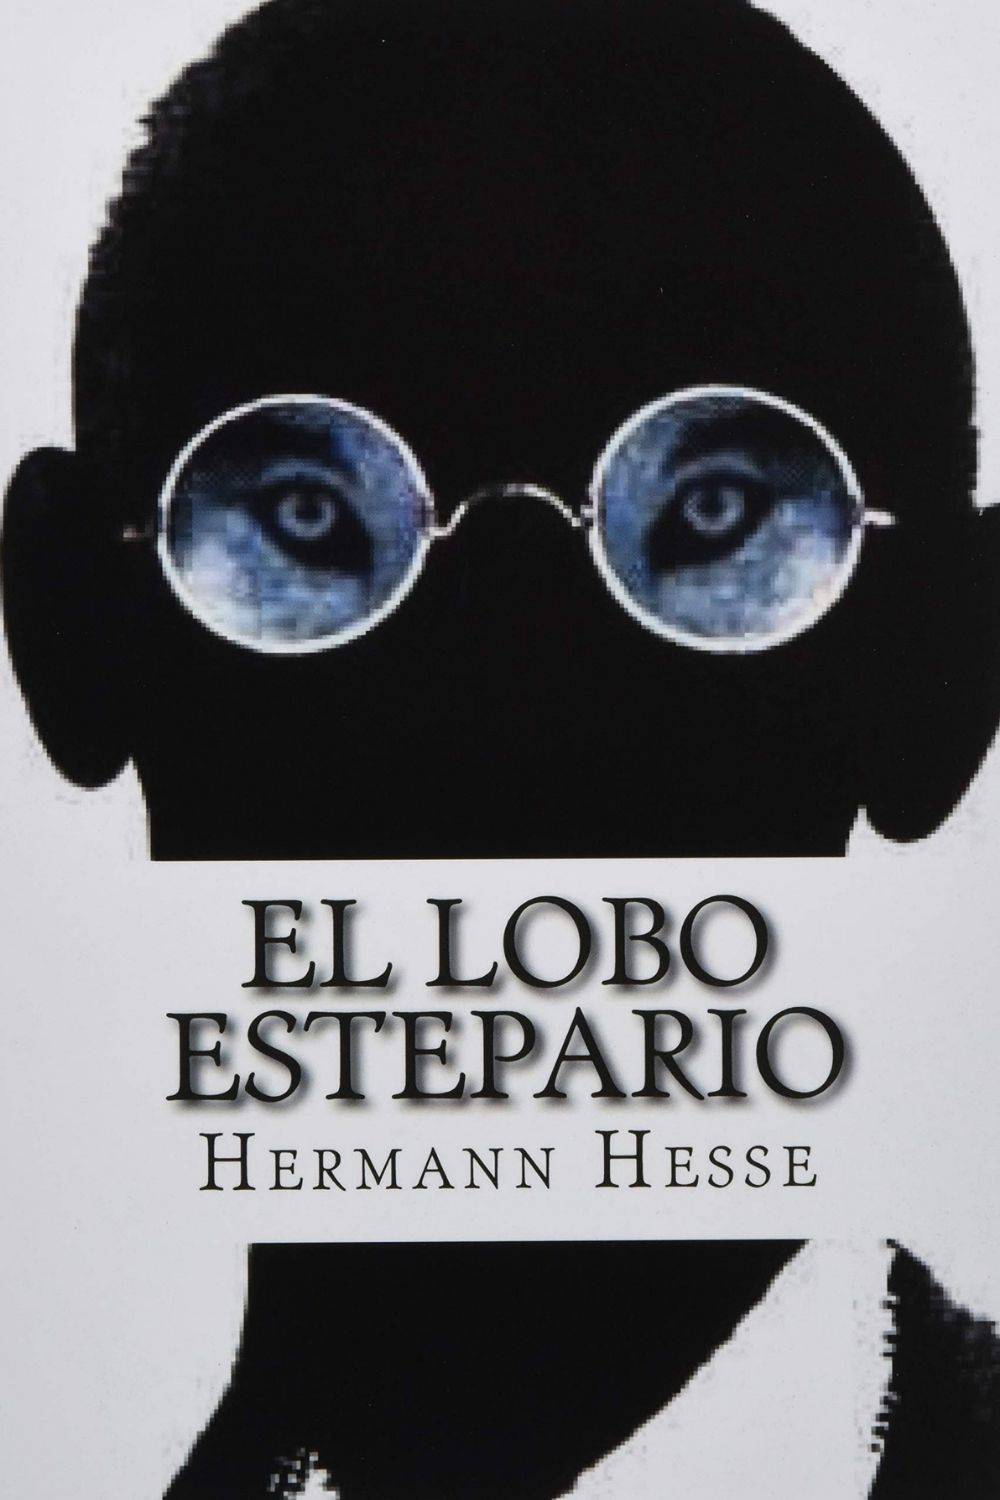 El lobo estepario - Herman Hesse